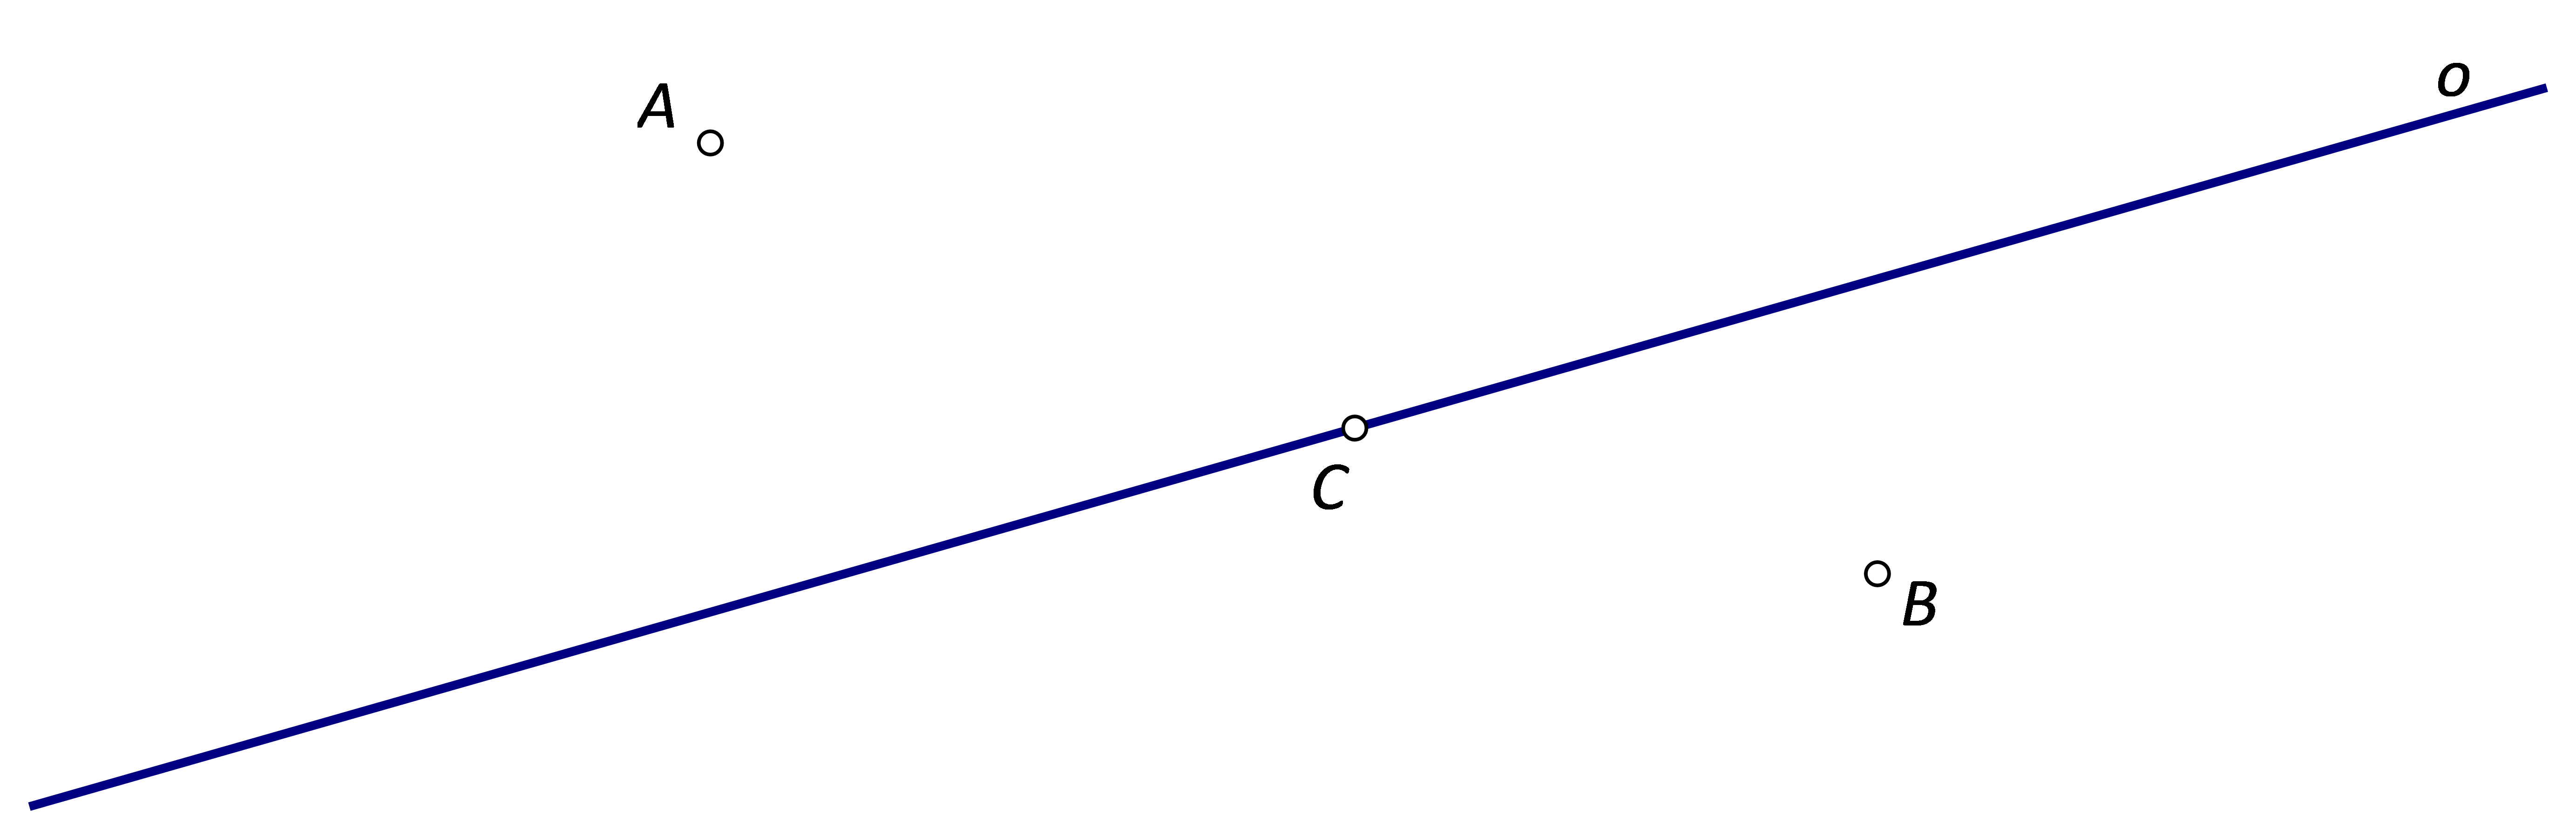 Na slici su točke A, B i C te pravac o, pri čemu su točke A i B s različitih strana pravca o, dok točka C pripada pravcu o.